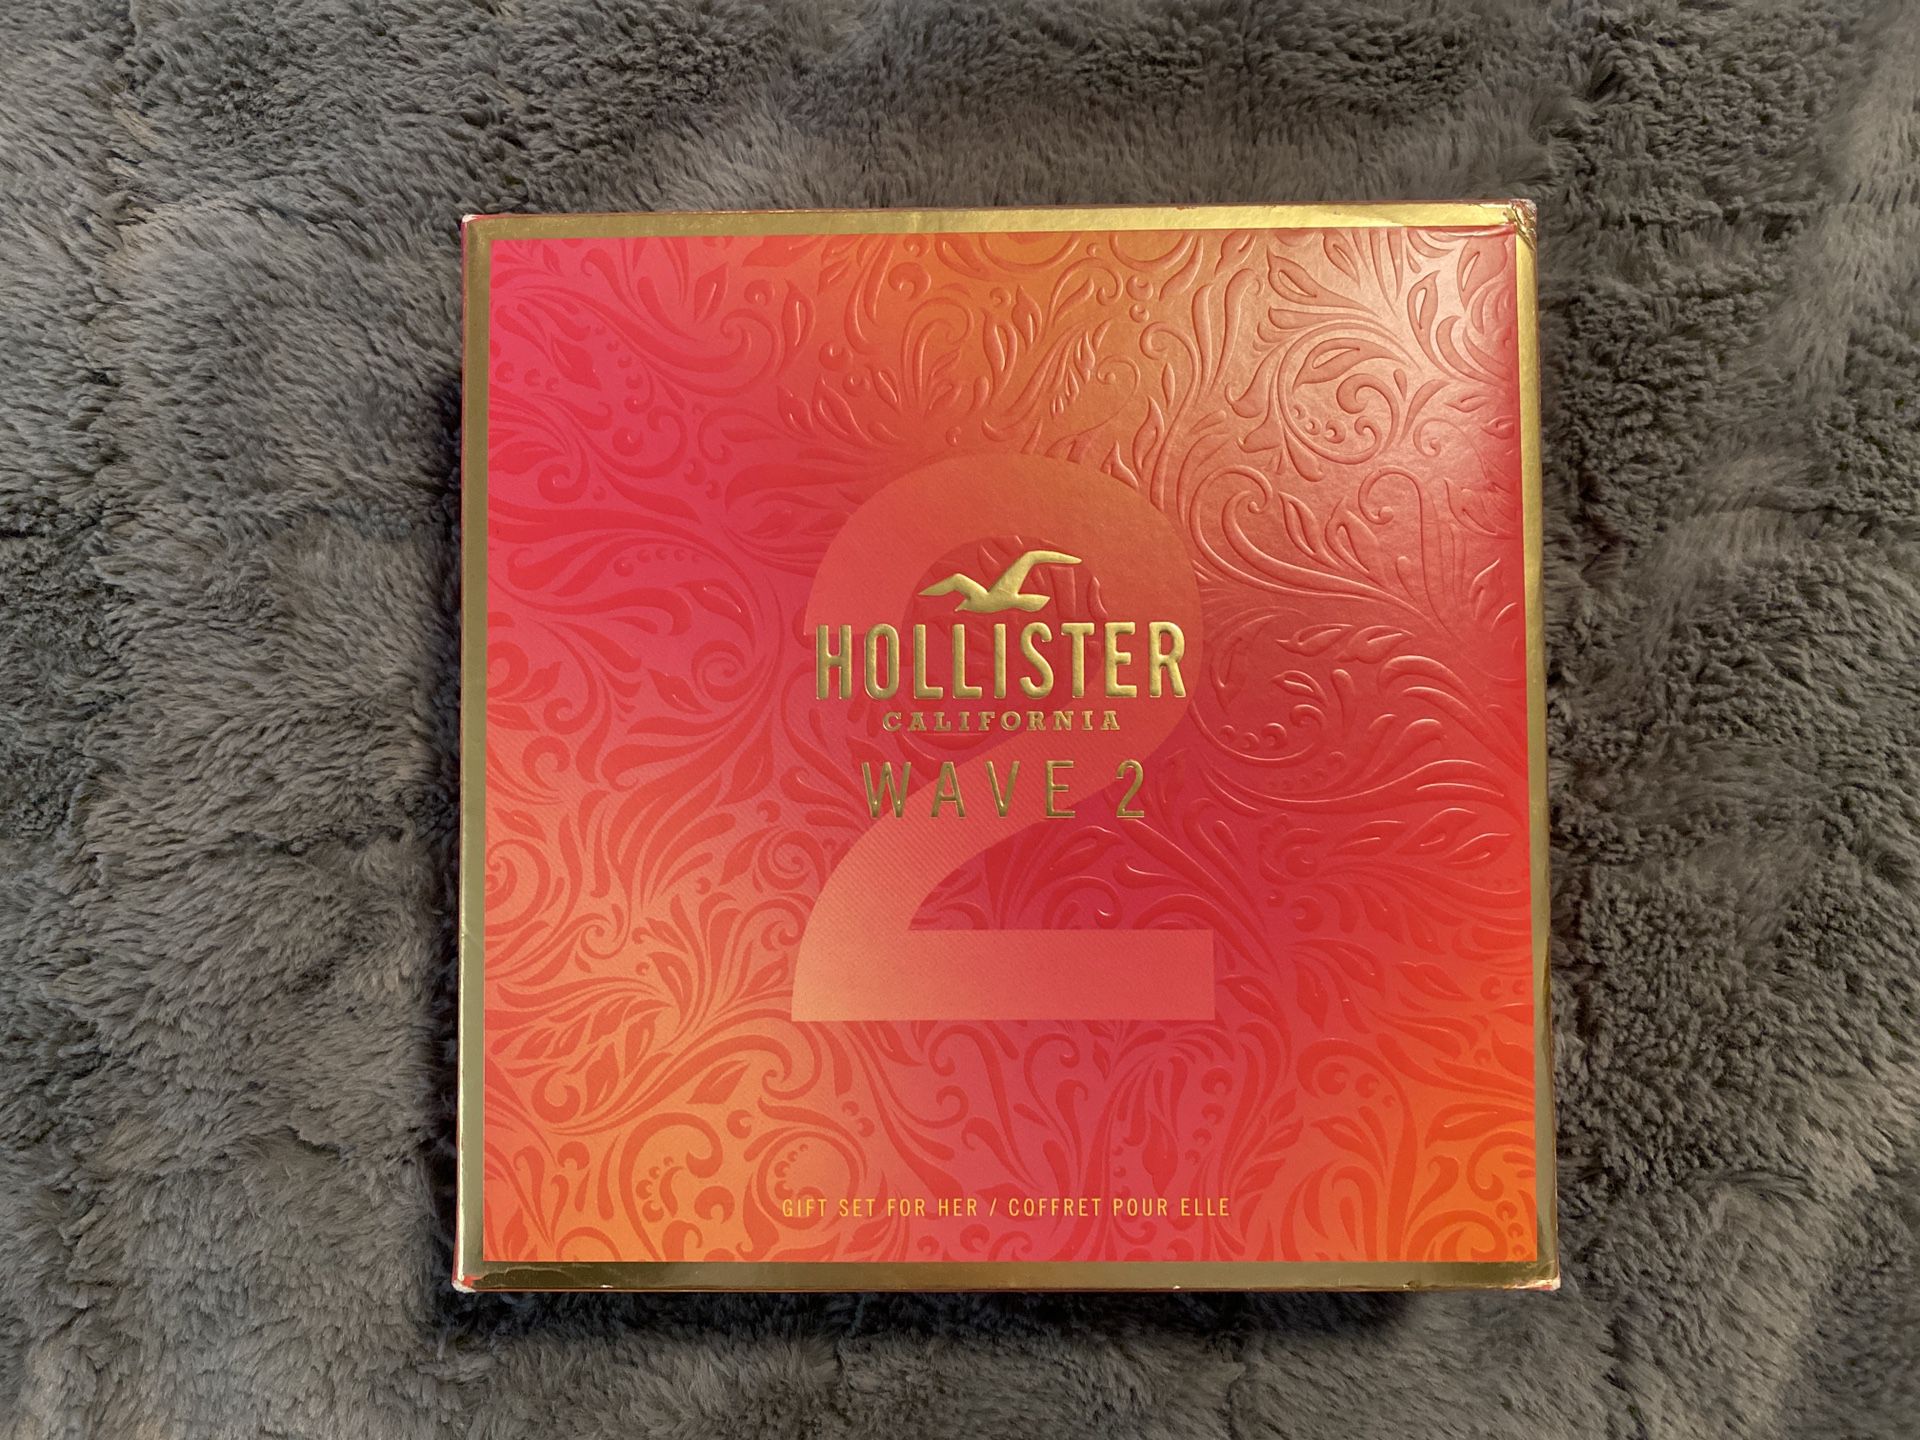 Brand New Hollister Wave 2 Womens Perfume Gift Set